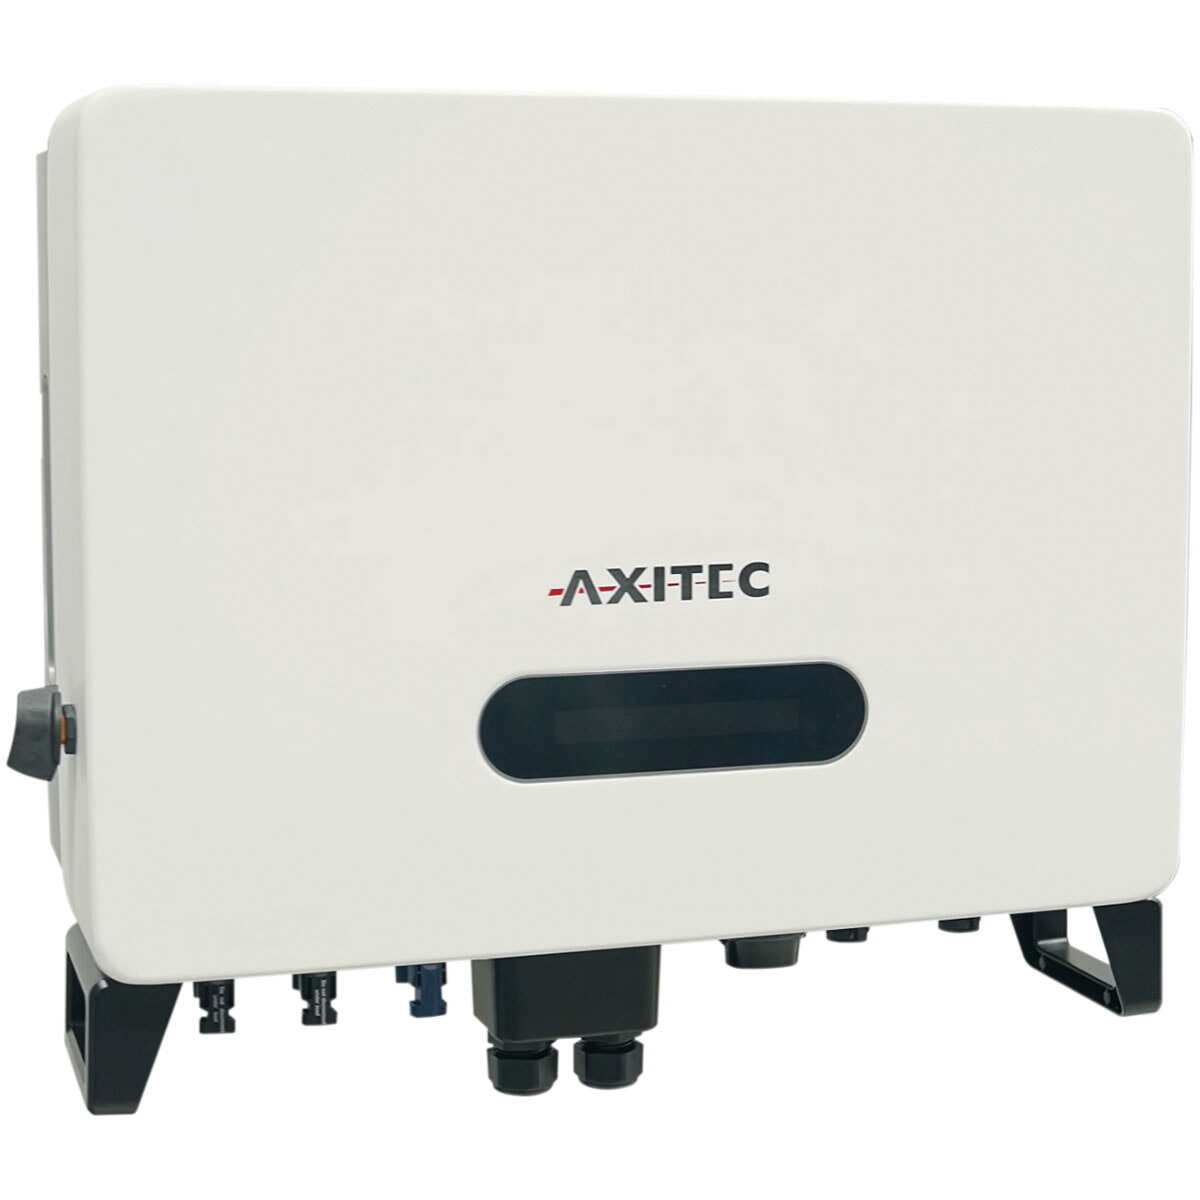 AXITEC Axihycon 5H hybrid inverter, 3-phase